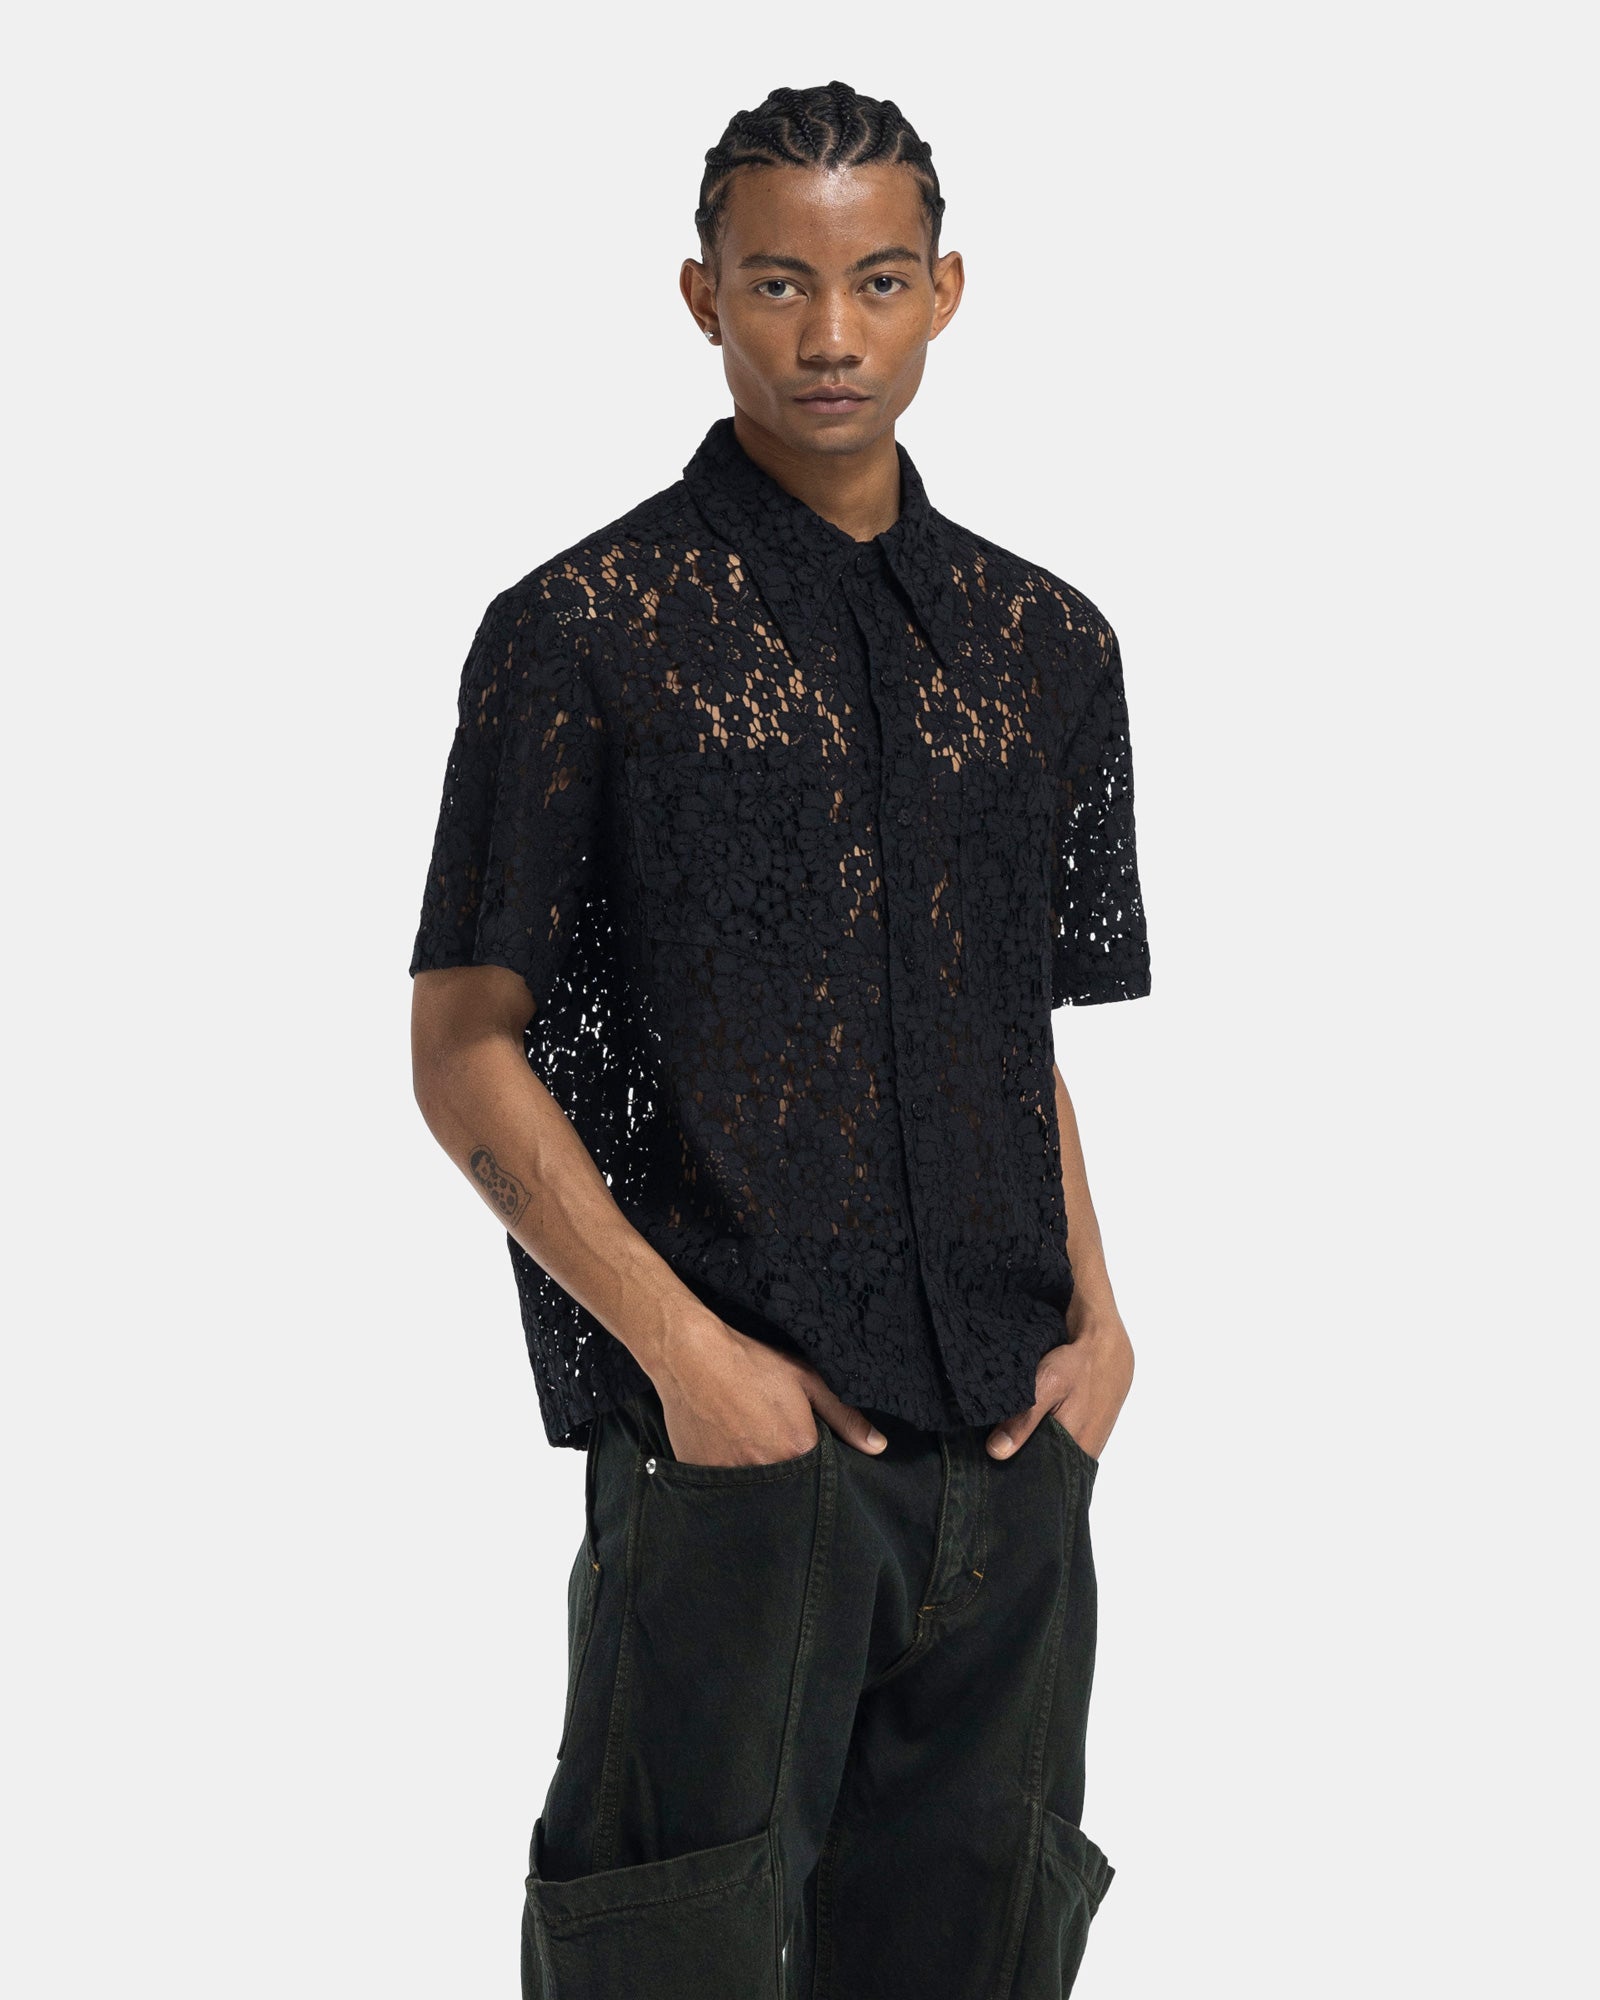 Male model wearing ECKHAUS LATTA black lace shirt on white background